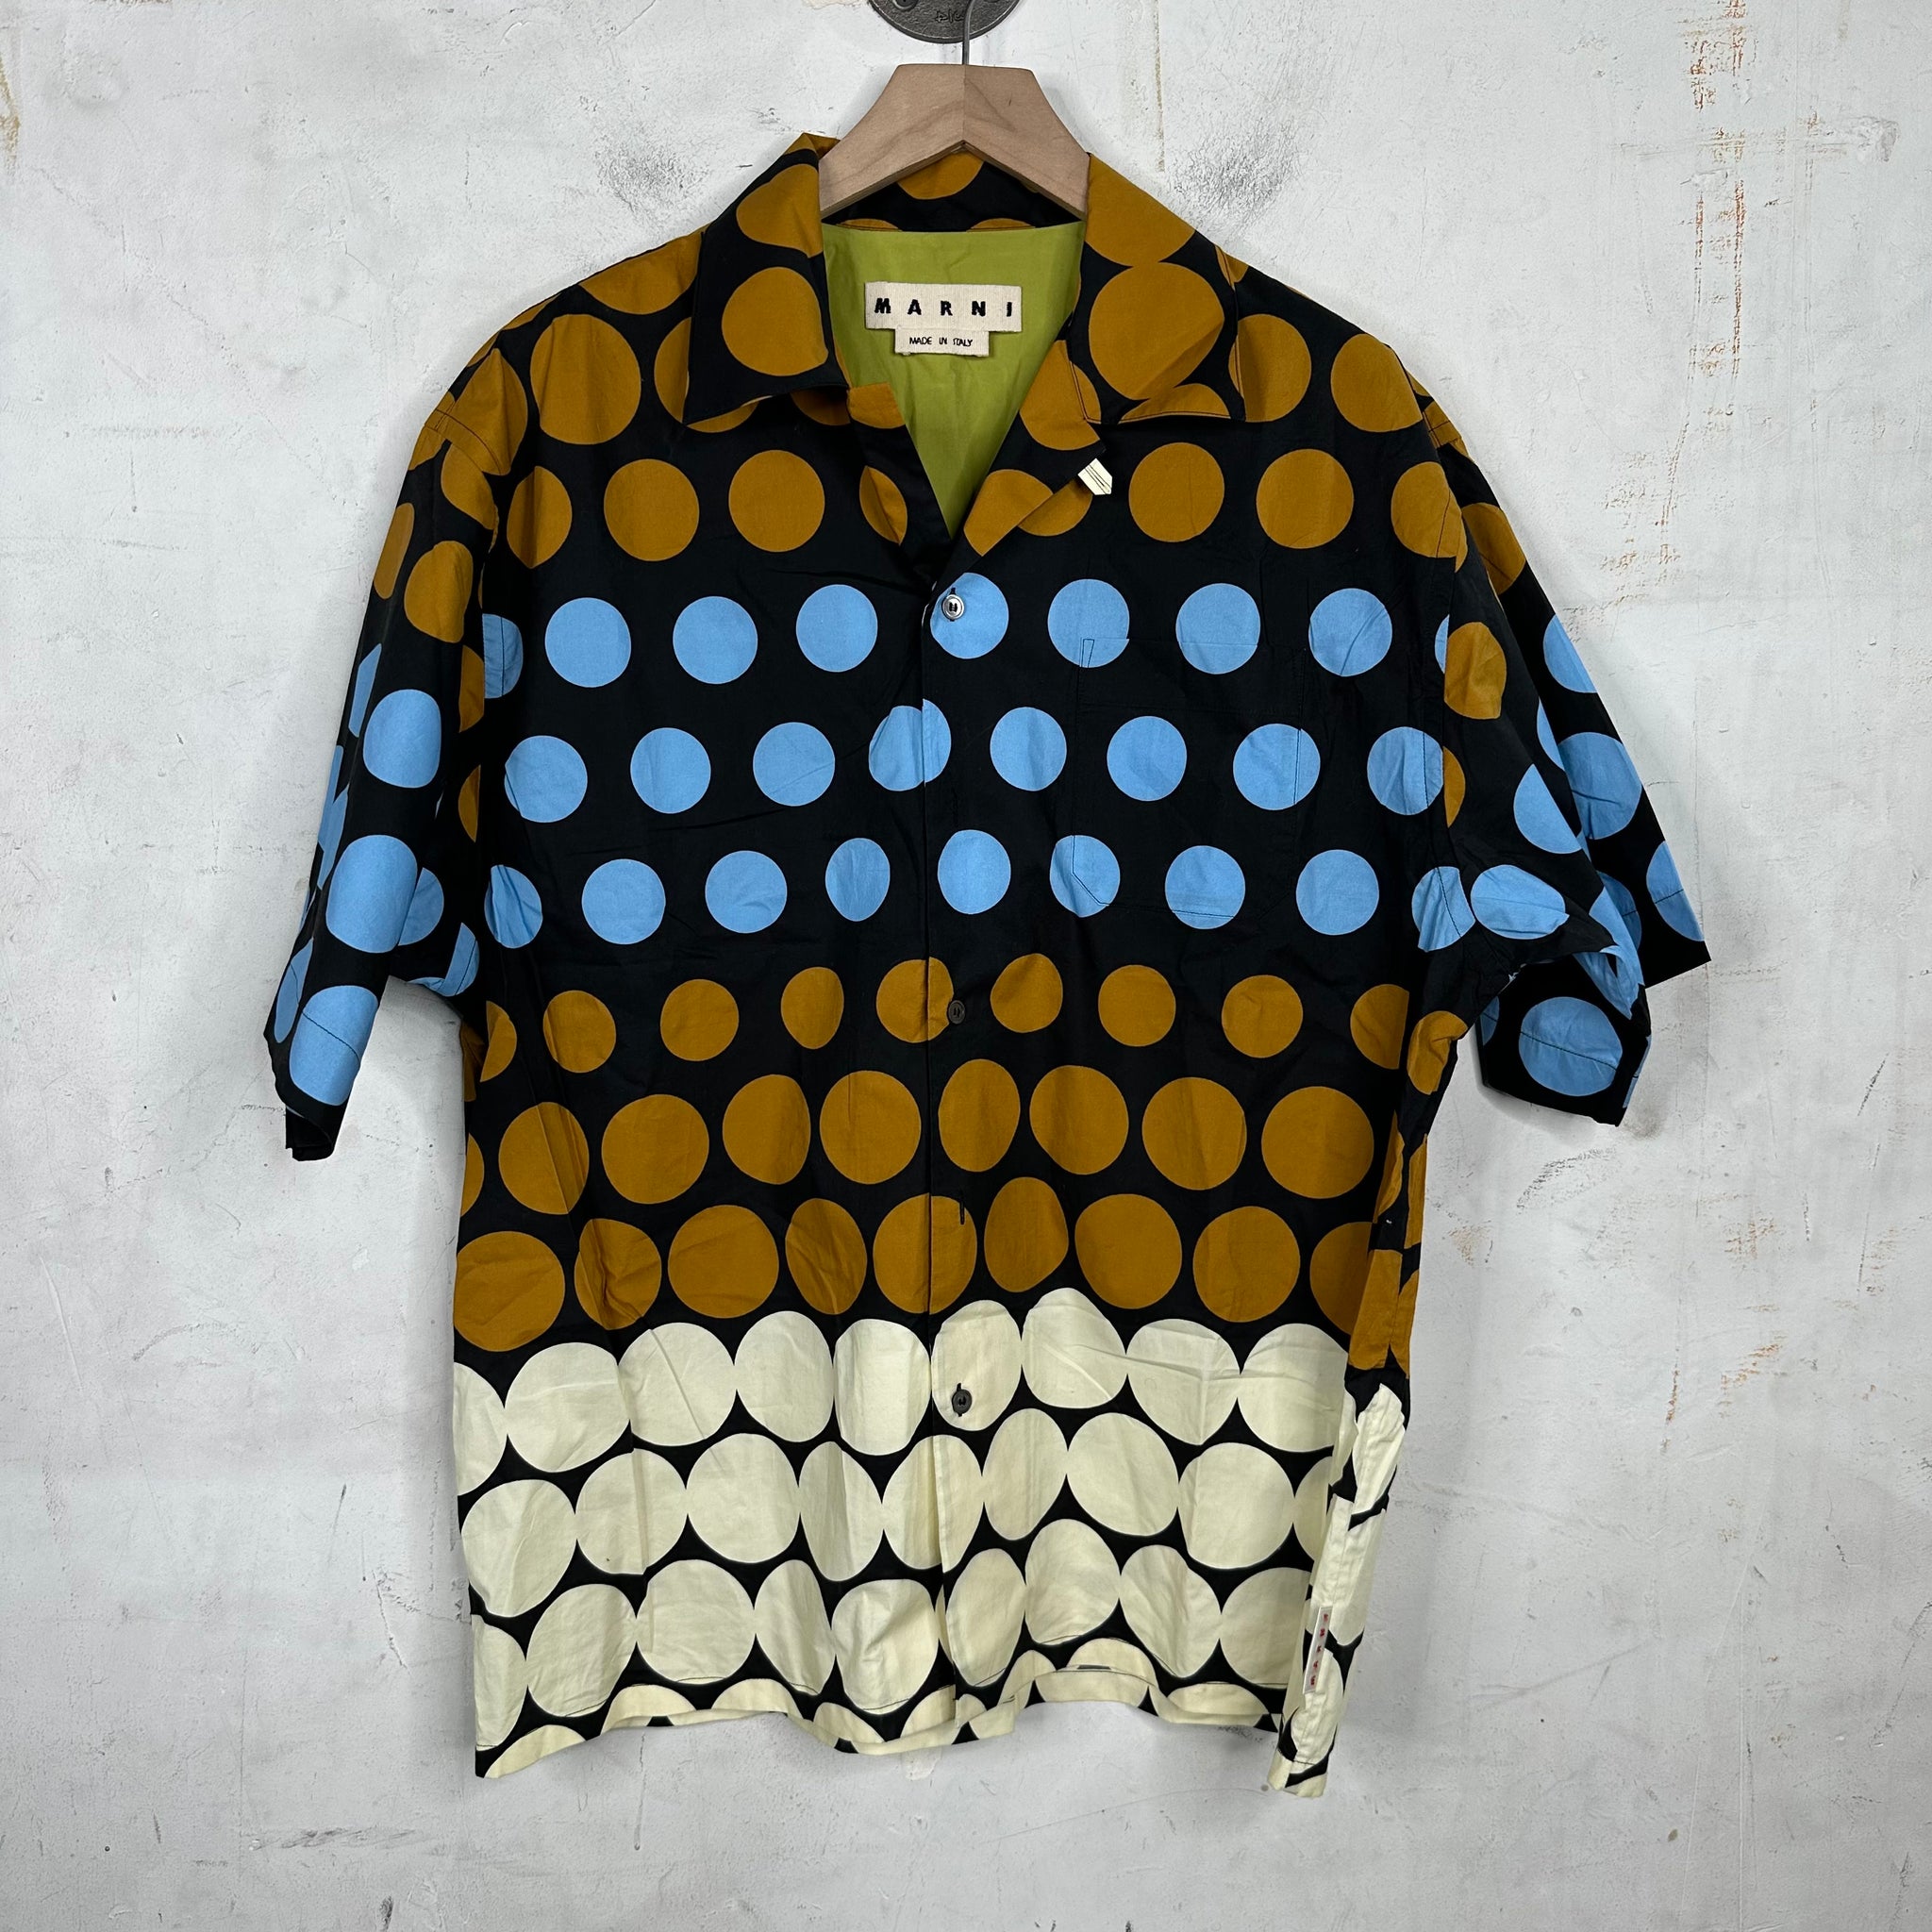 Marni Dots Bowling Shirt